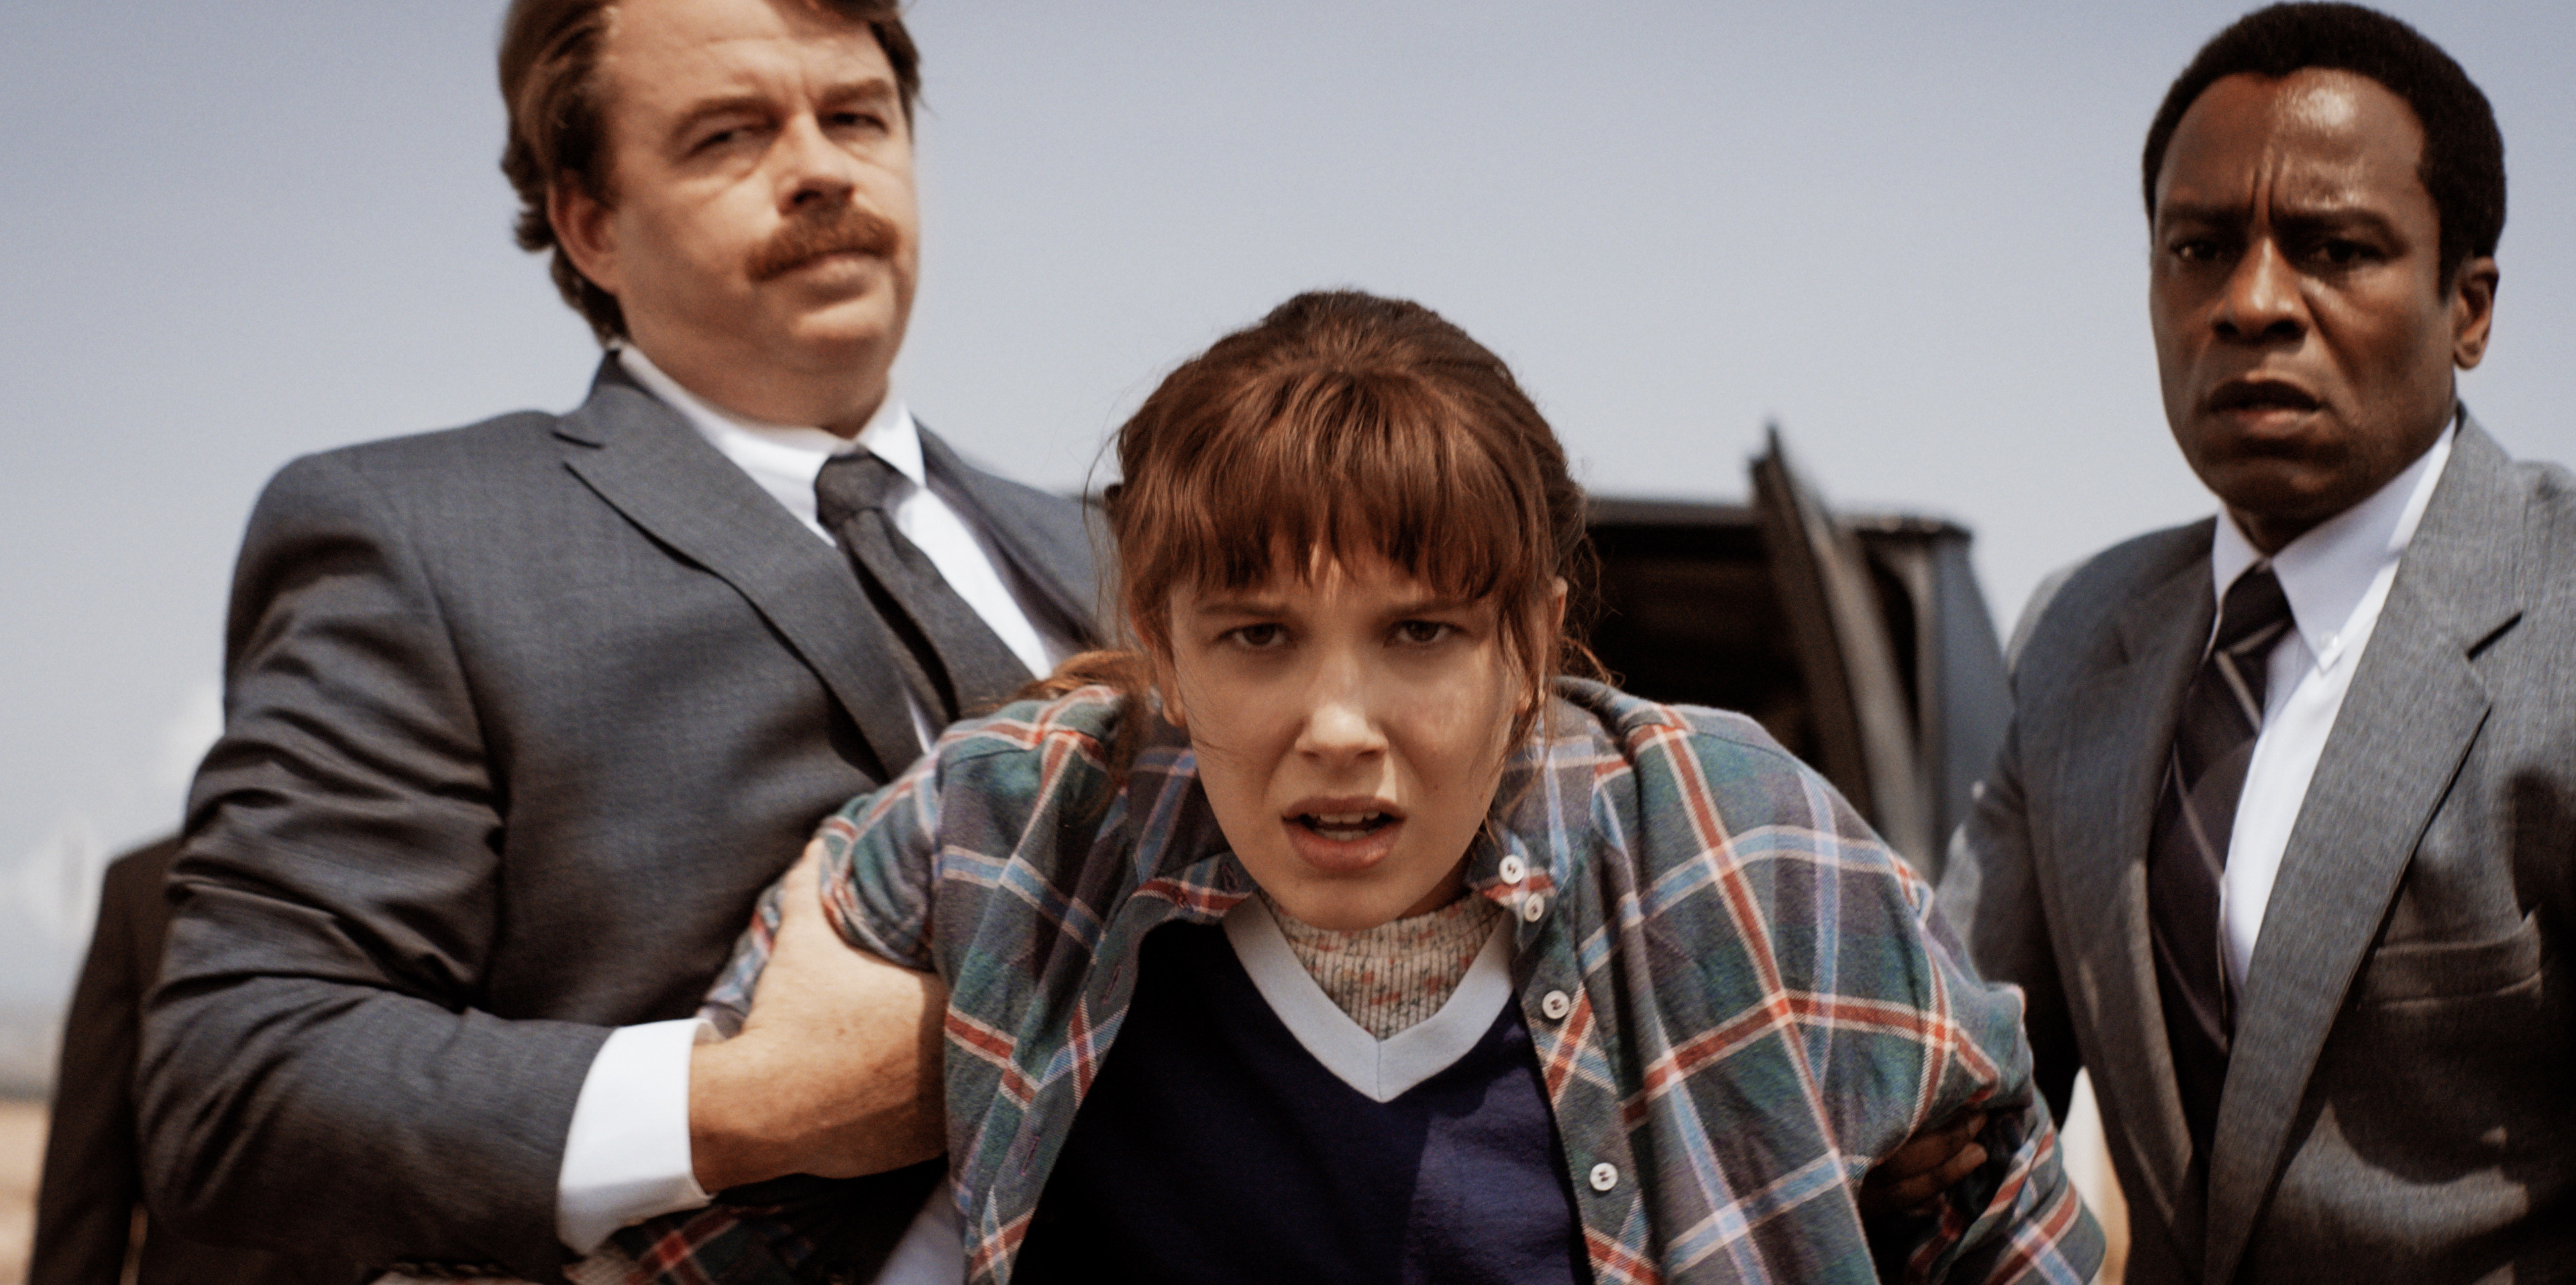 Stranger Things 3's Millie Bobby Brown on Eleven's power struggle